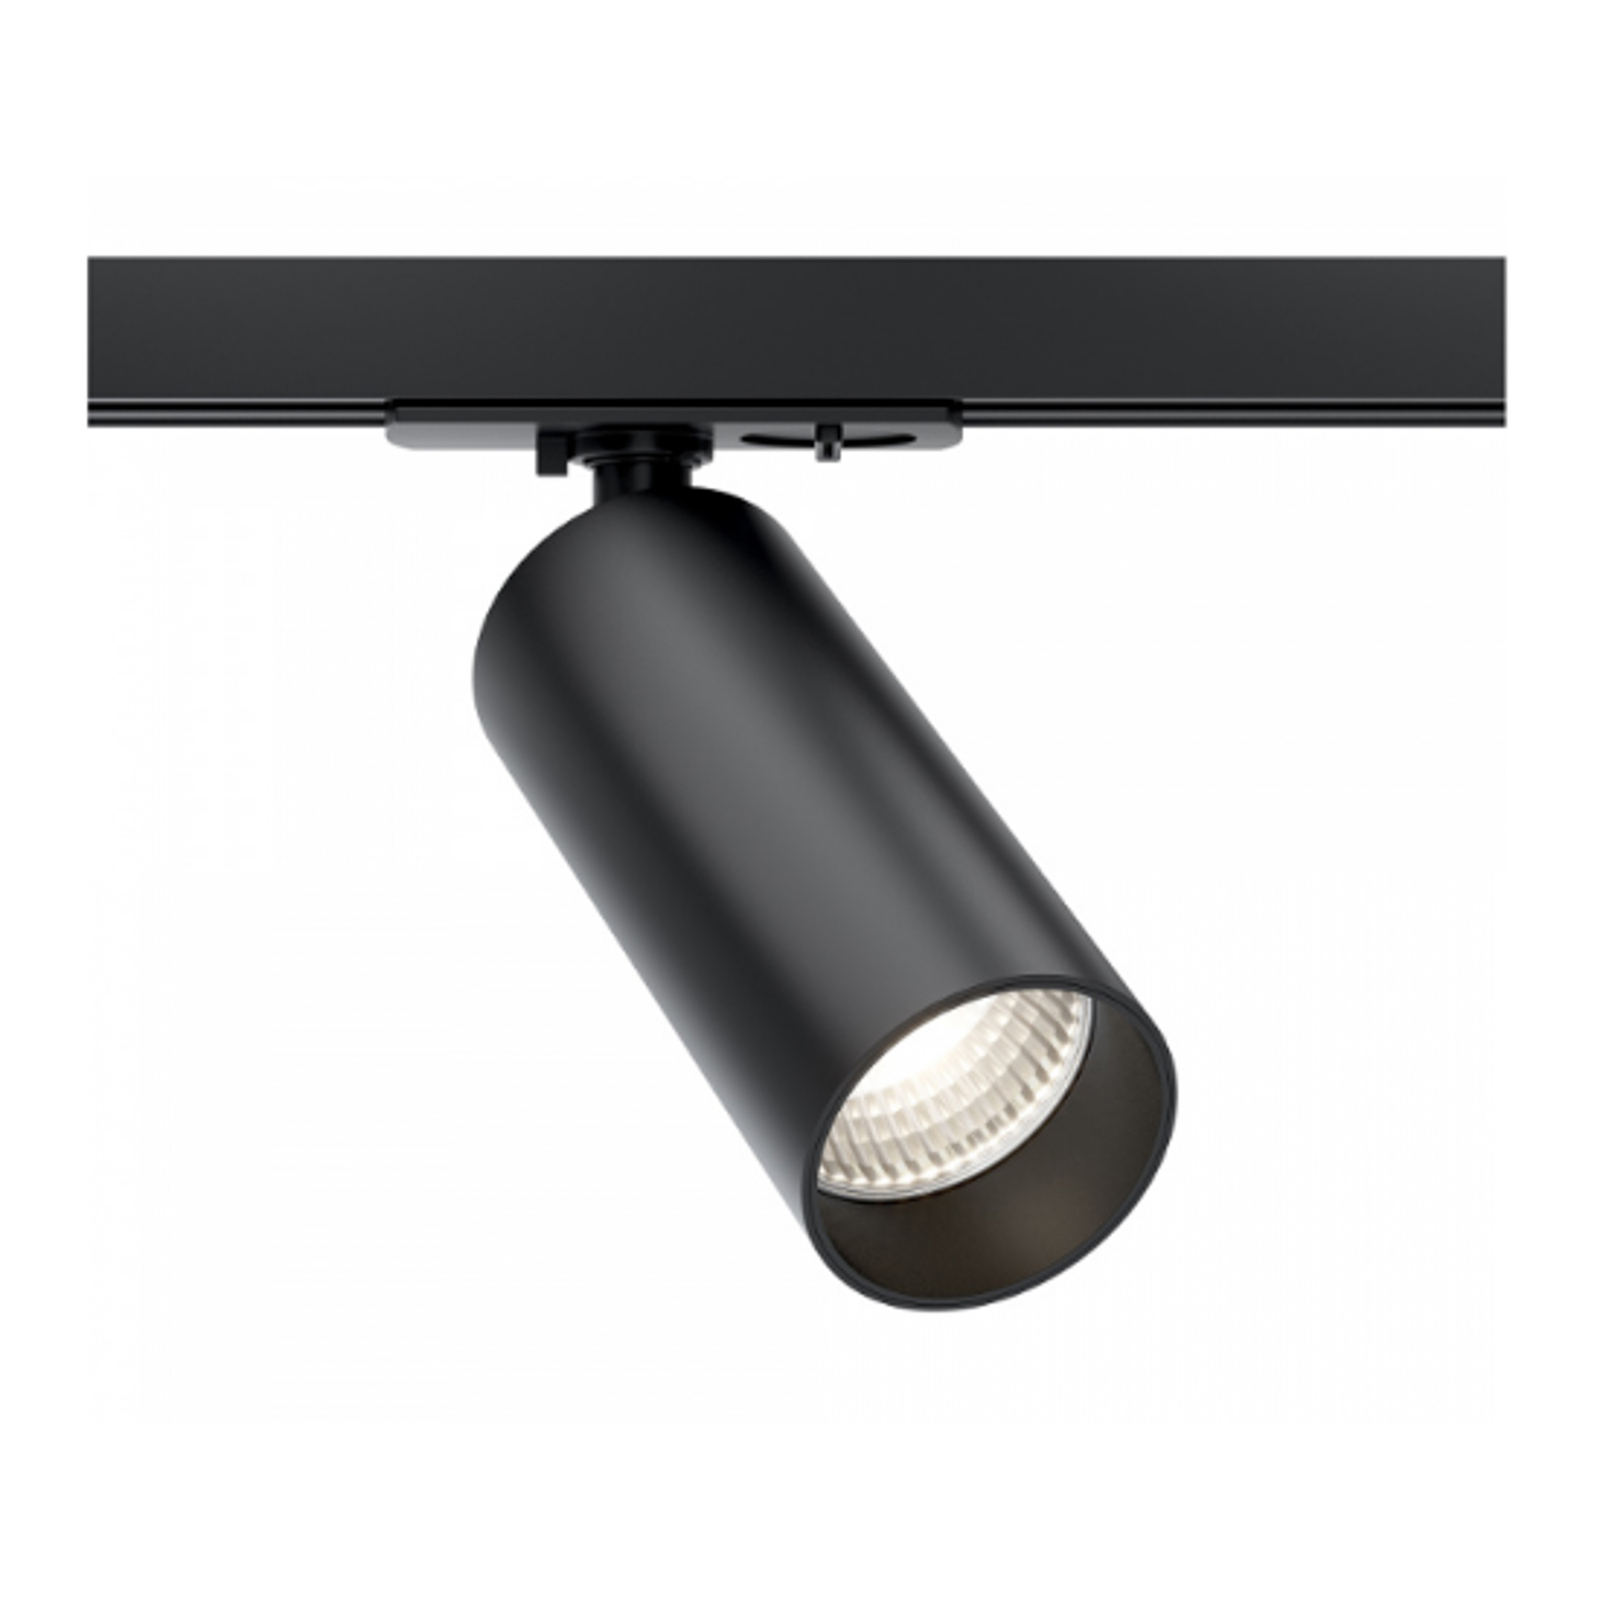 Maytoni Focus LED spot, Unity system, Triac, 930, black